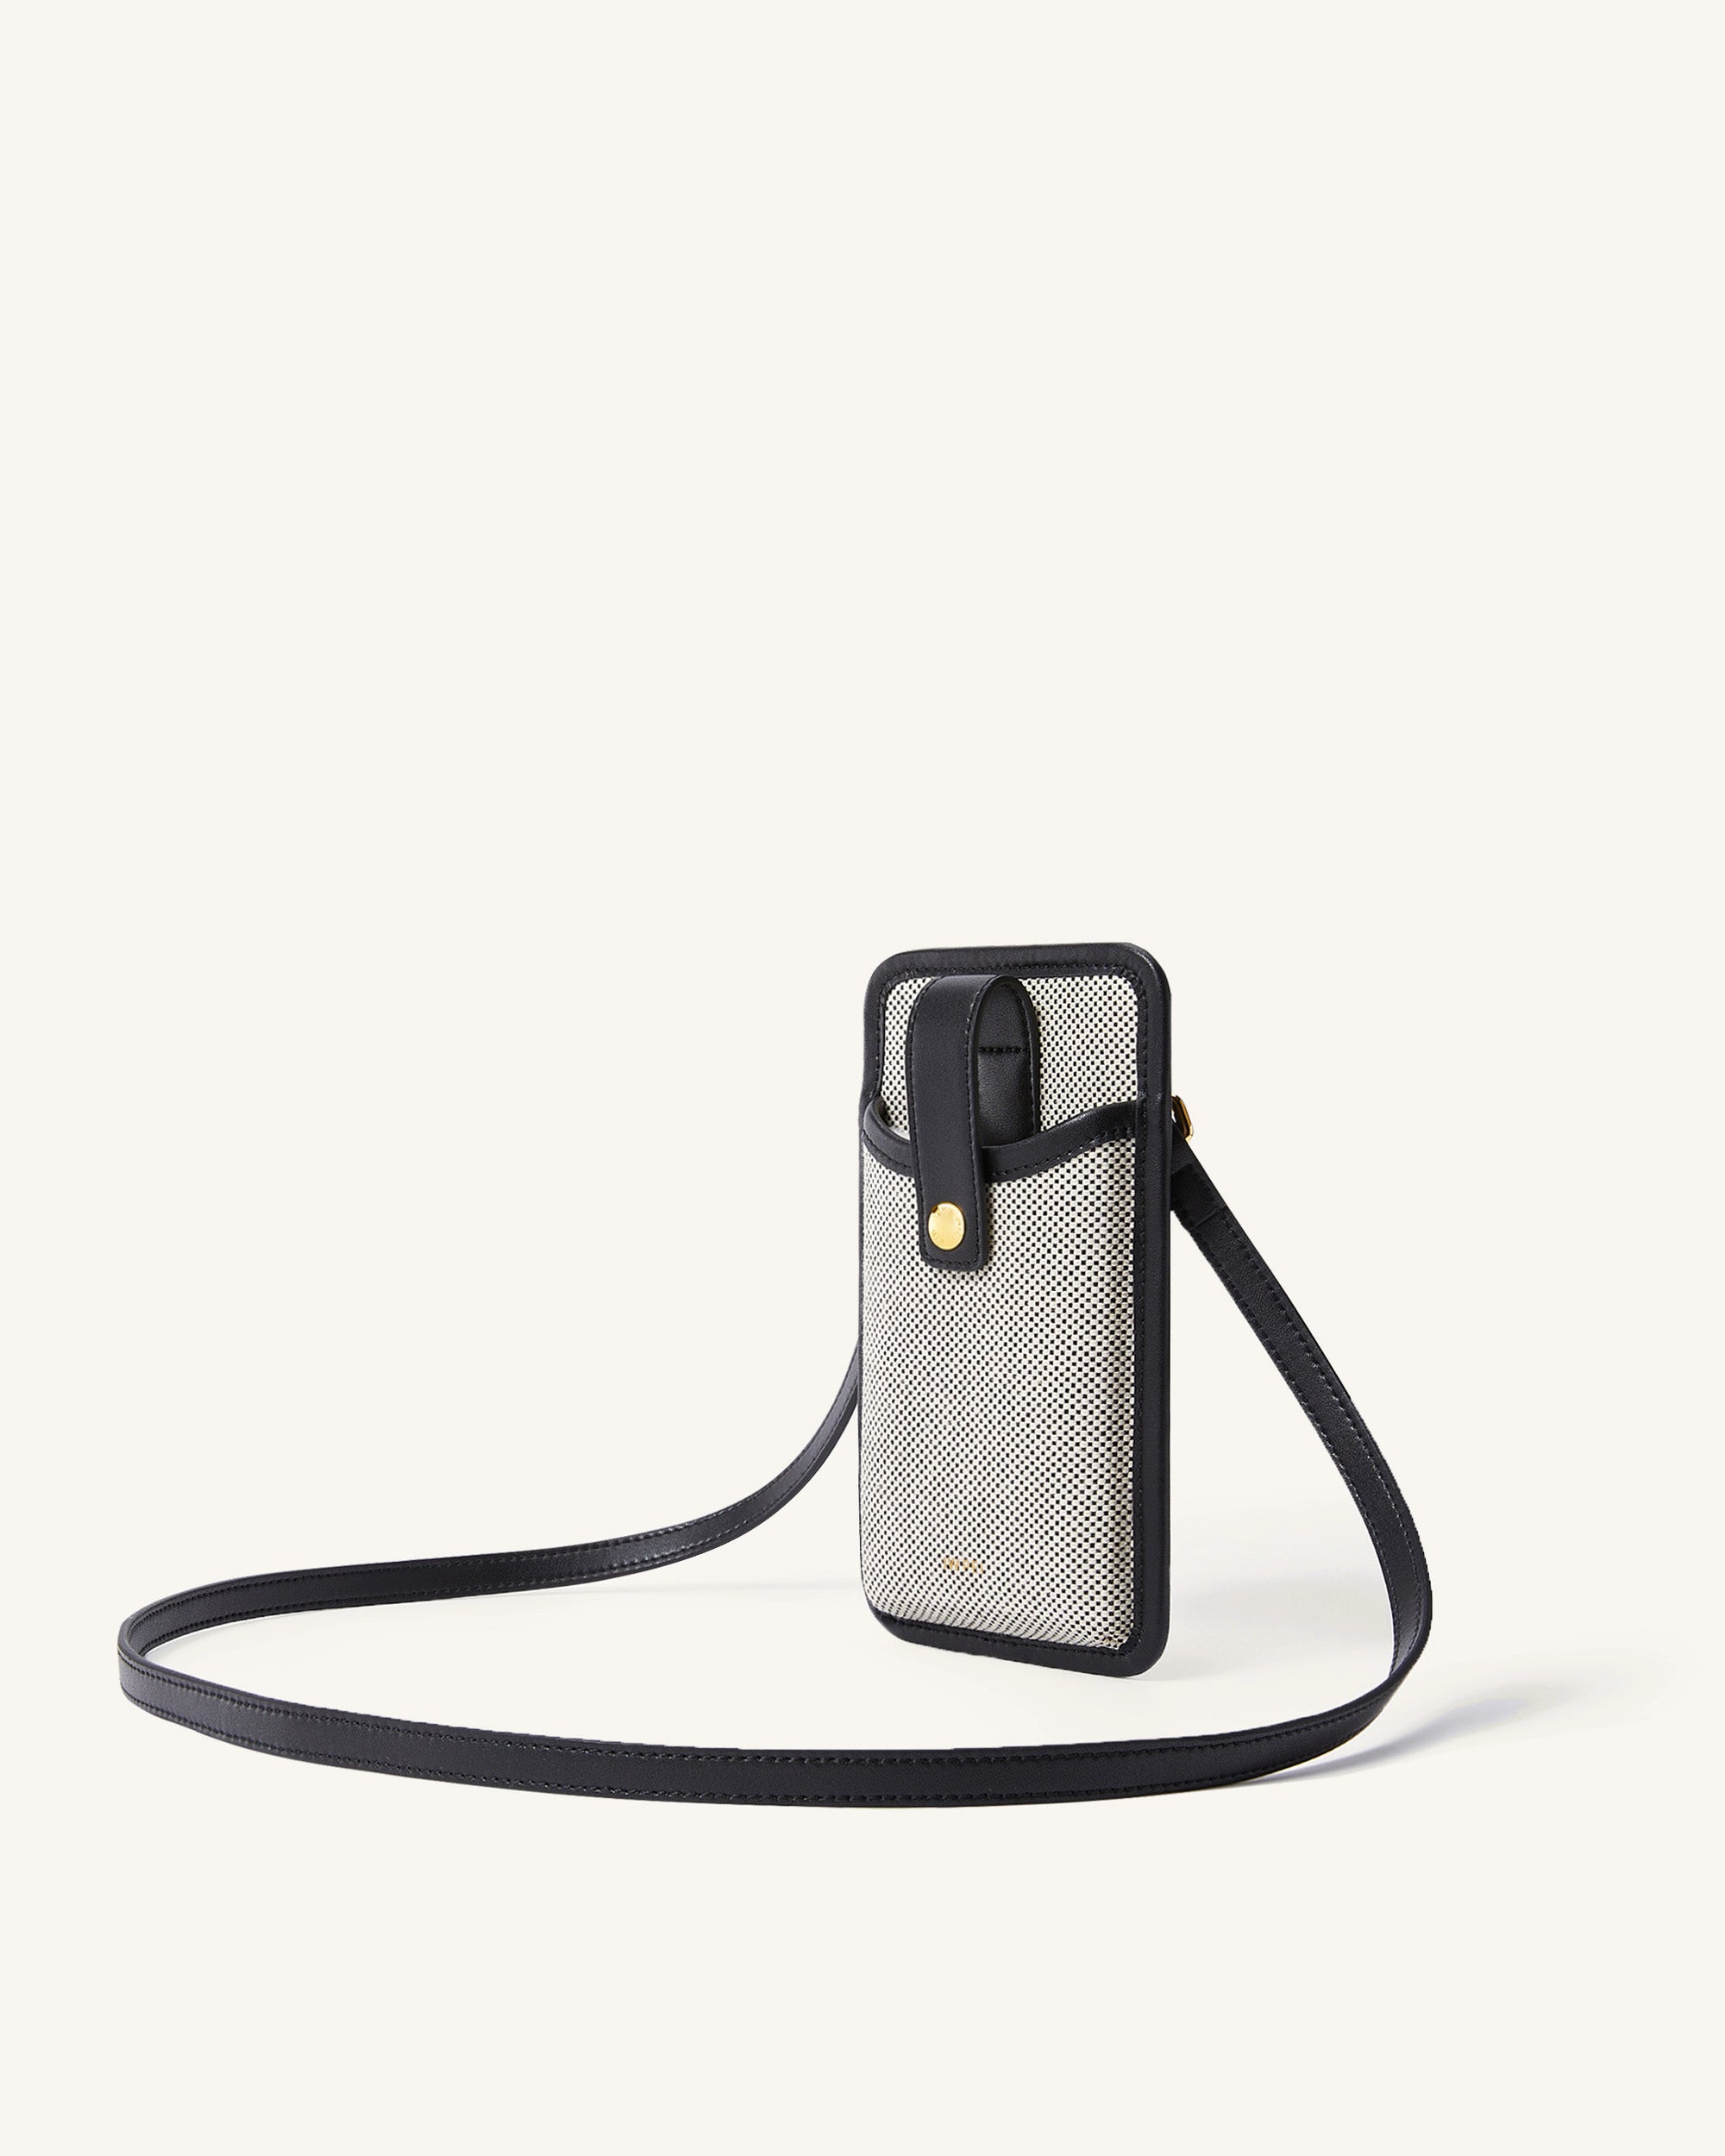 Louis Vuitton iPhone Case - G&G Bermuda